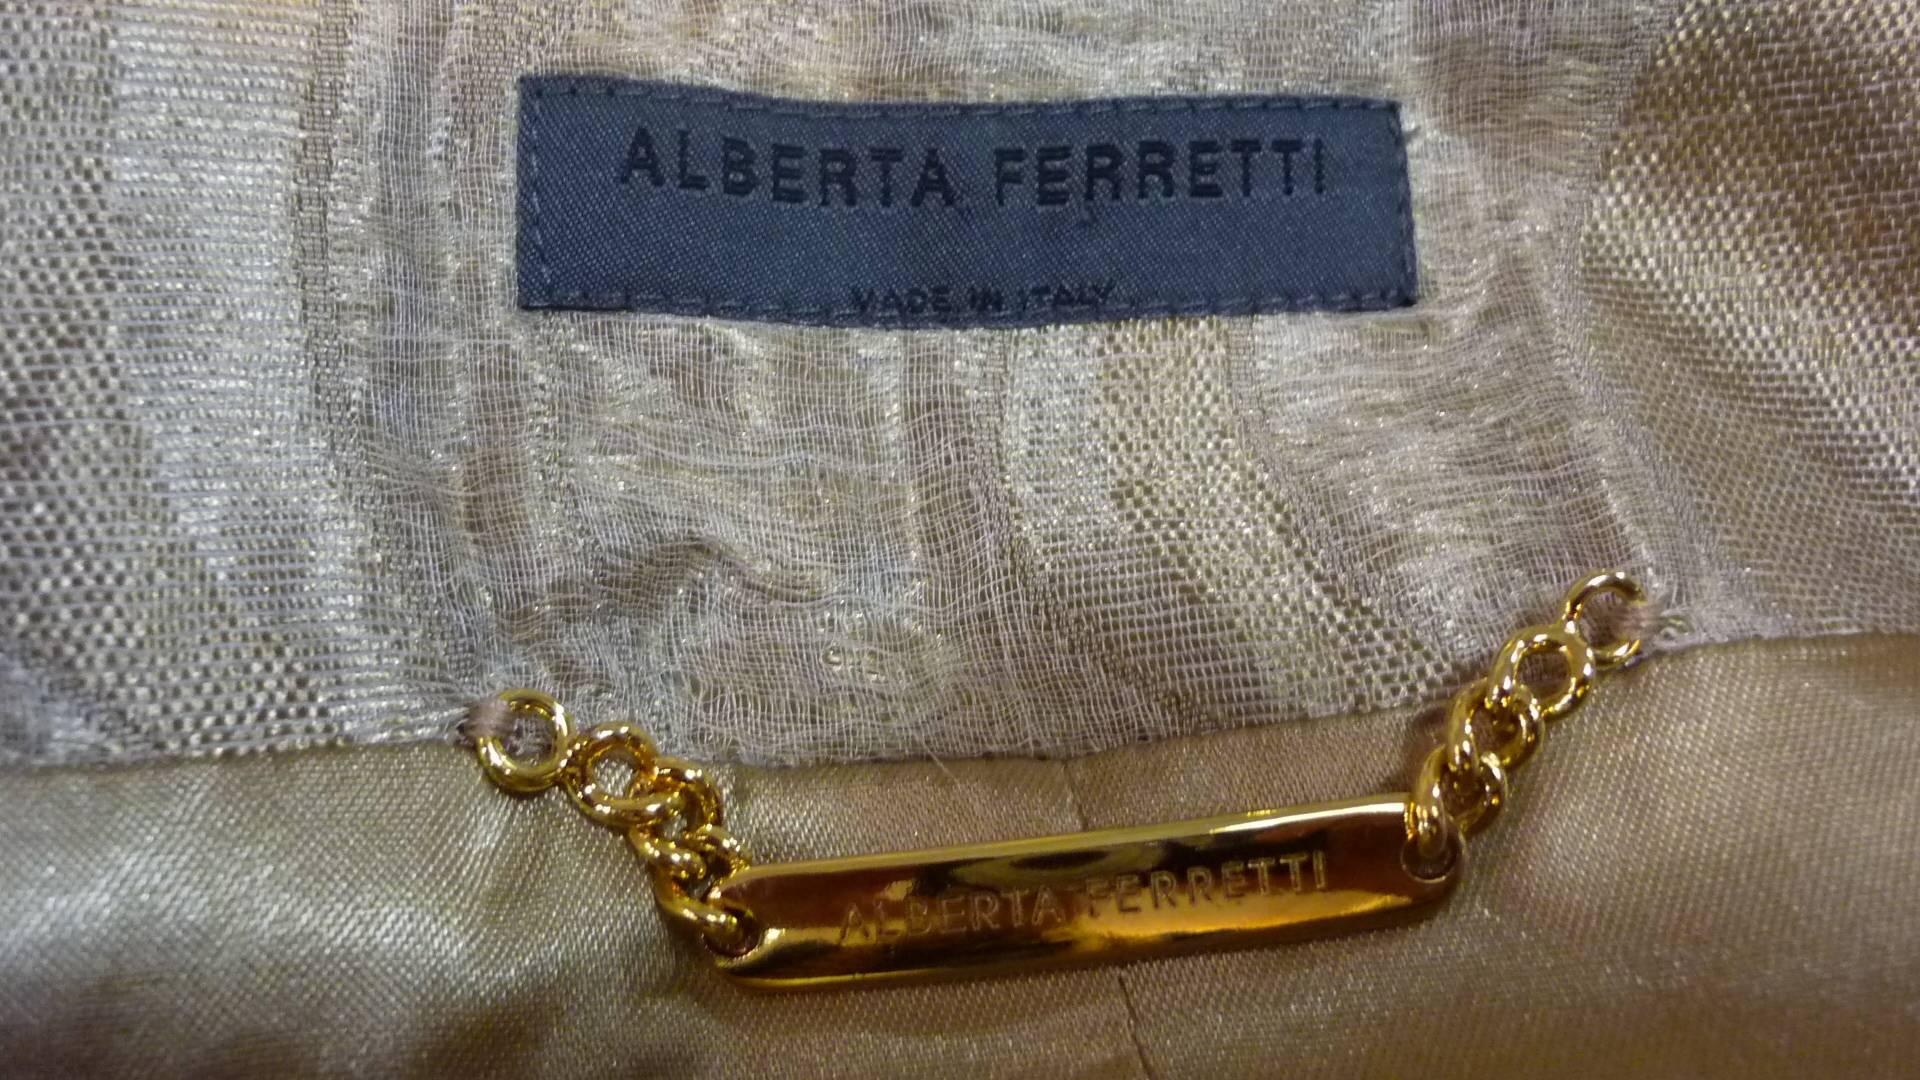 2008 S/S Alberta Ferretti Metallic Gold Patterned Dress (44 Itl) For Sale 1